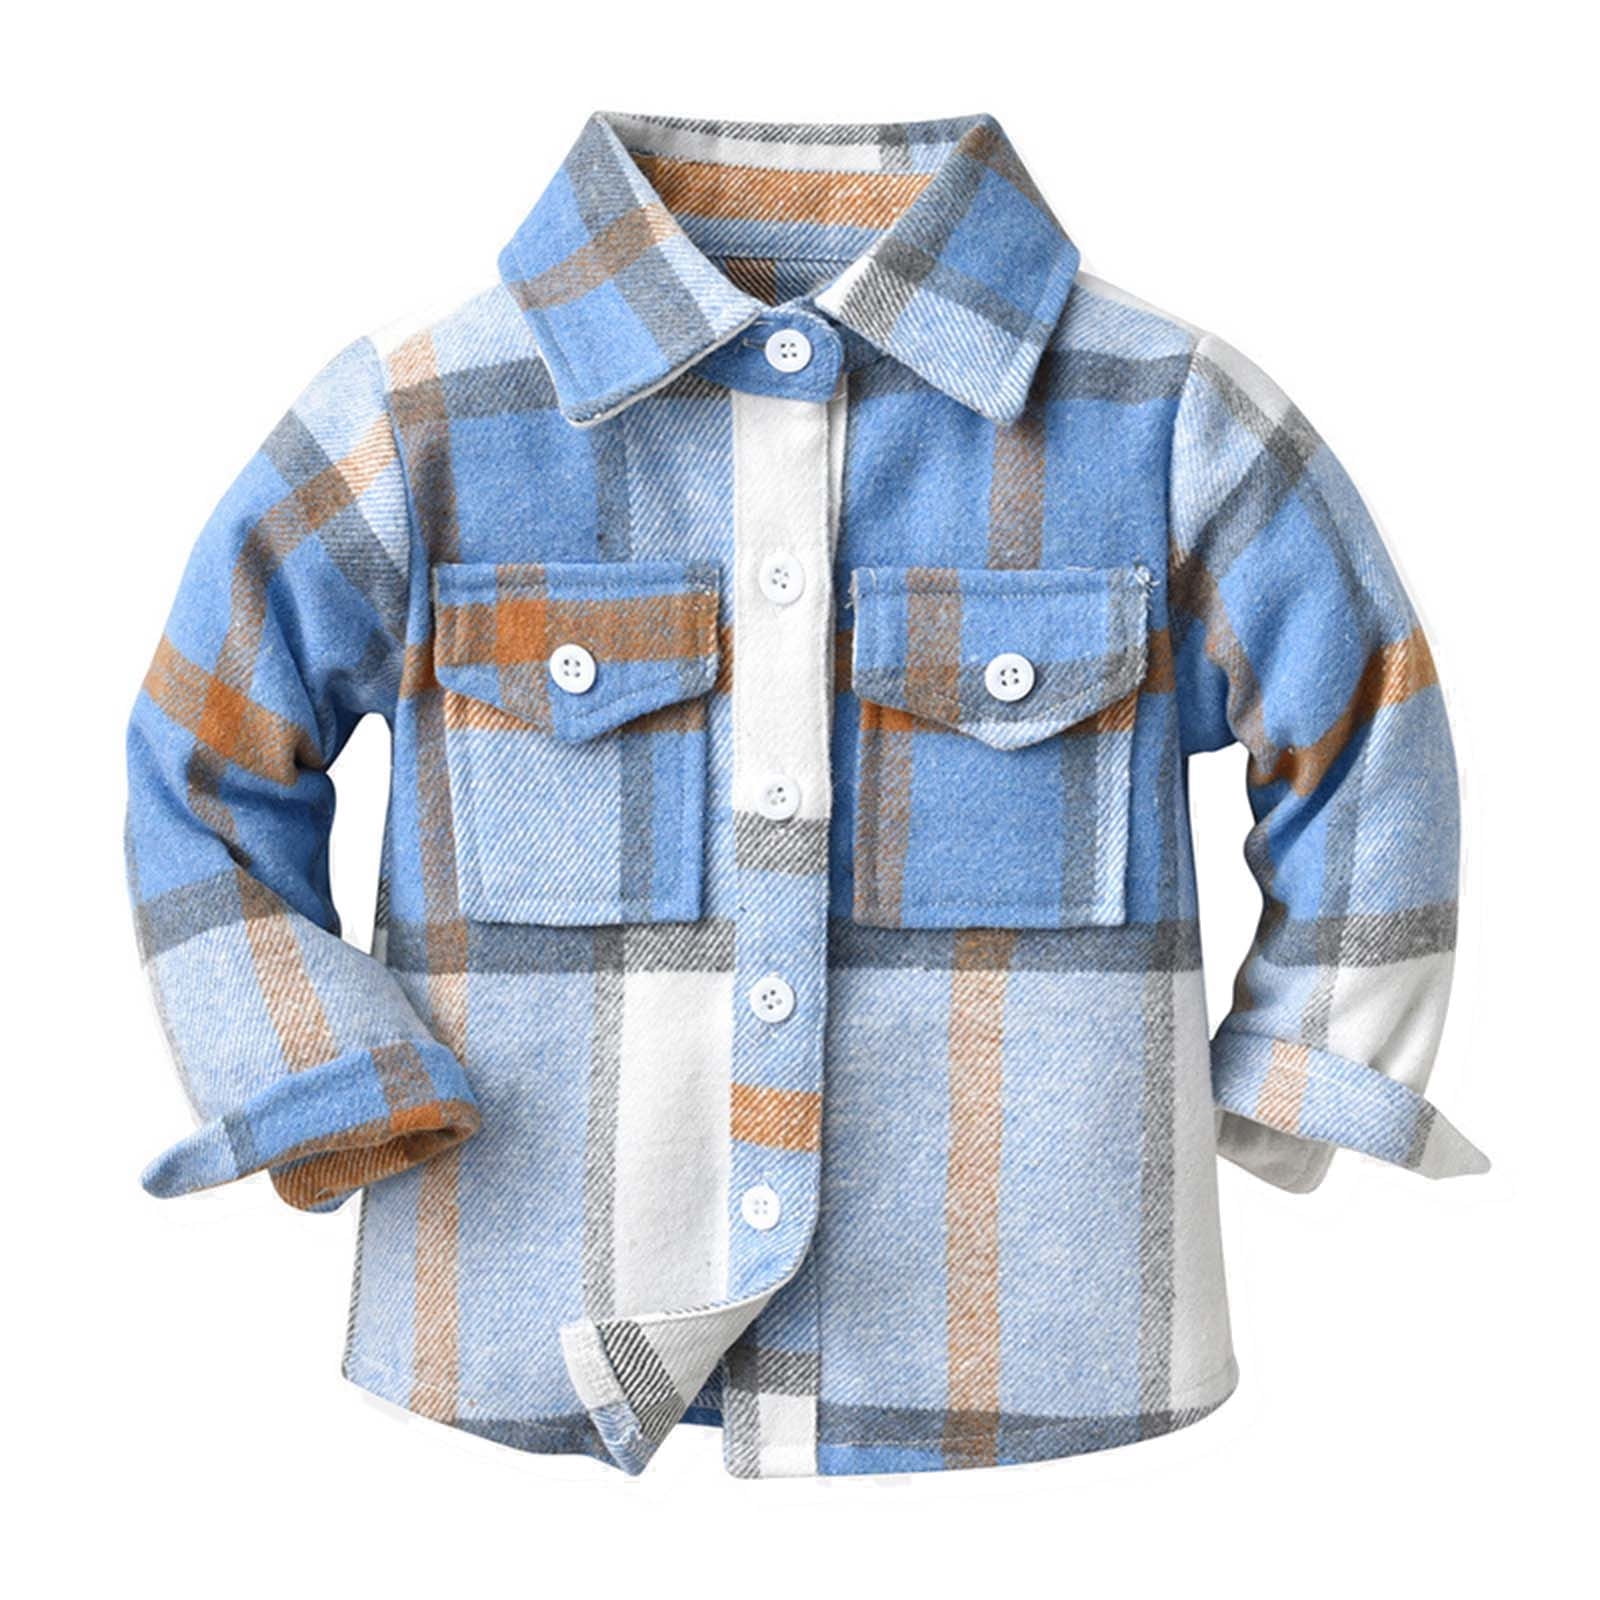 BELLZELY Toddler Clothing Sets Clearance Toddler Flannel Shirt Jacket ...